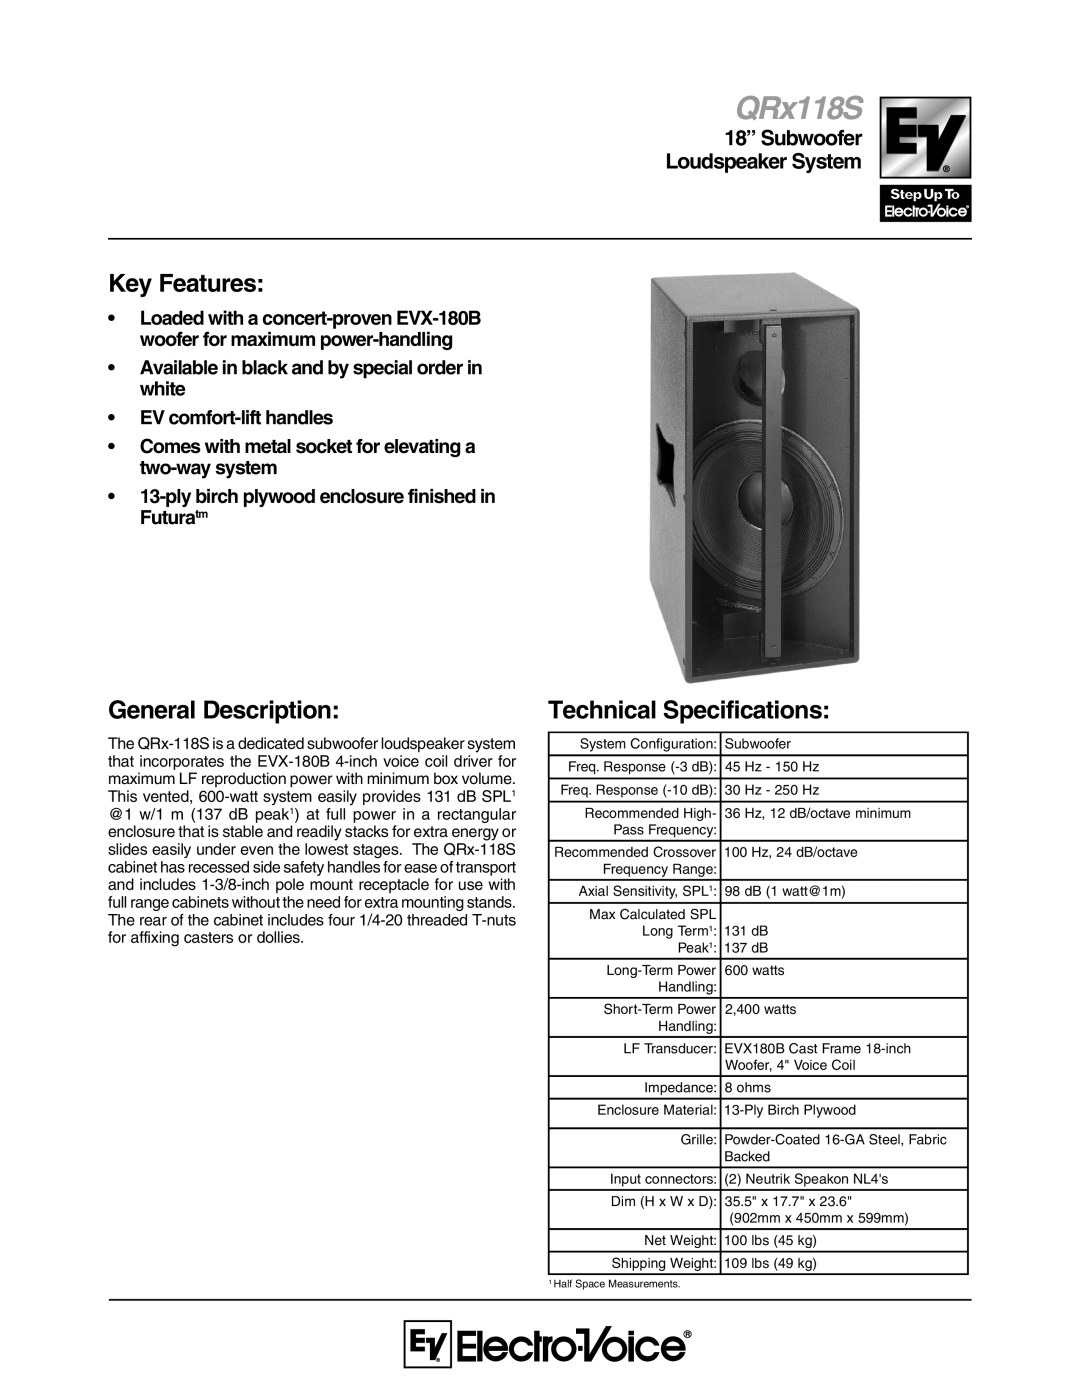 Electro-Voice QRx 118S technical specifications Key Features, General Description, Technical Specifications, QRx118S 